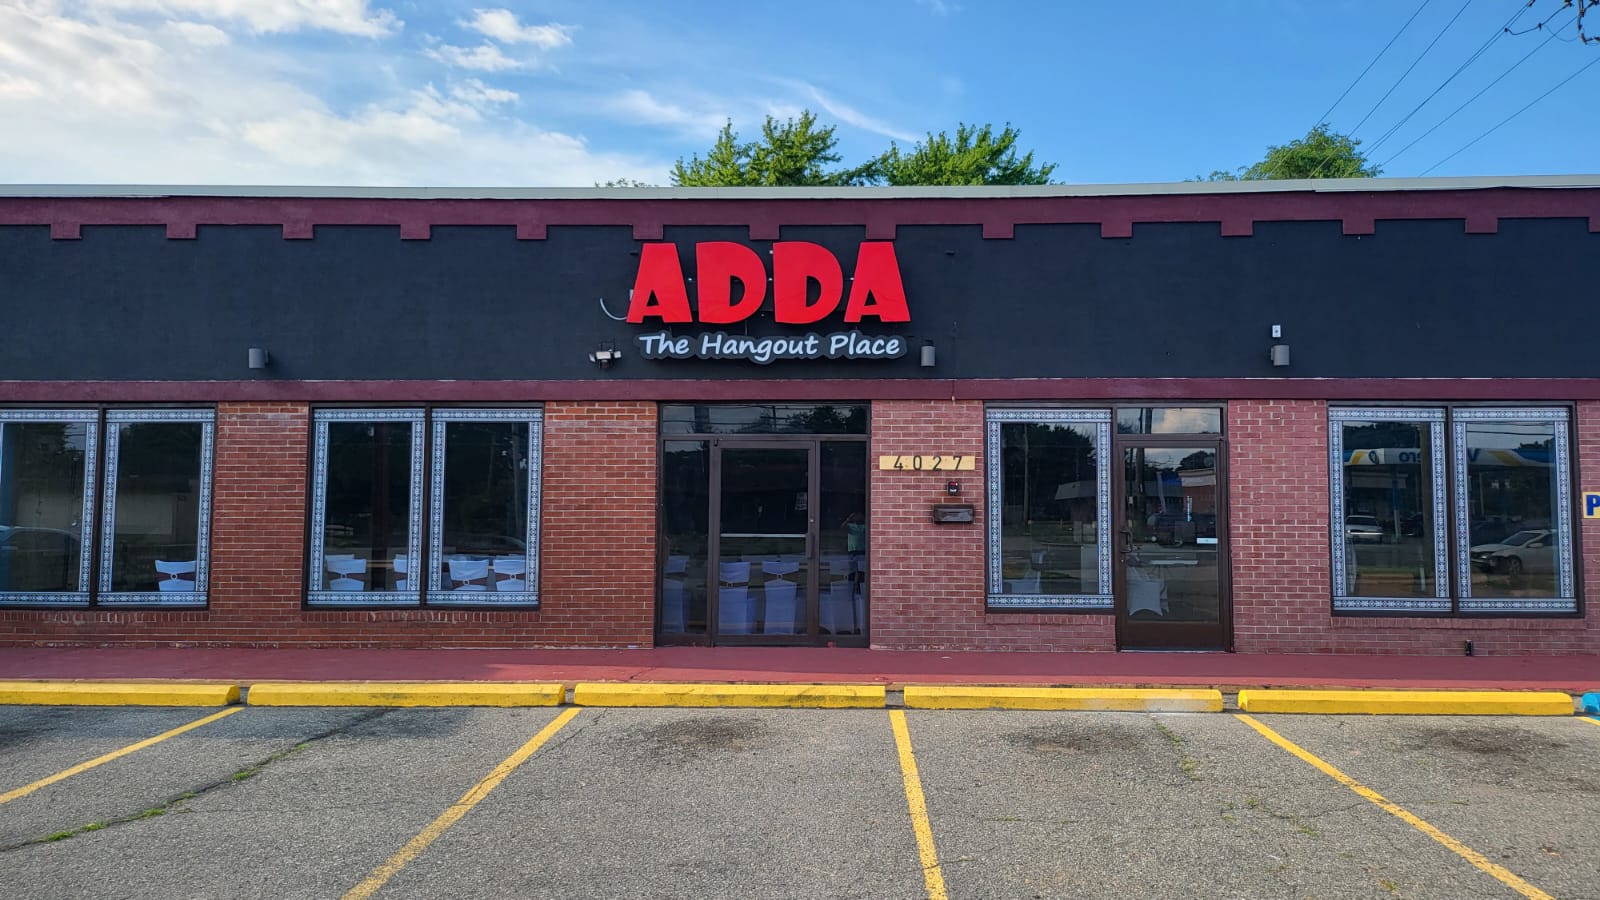 Adda Restaurant